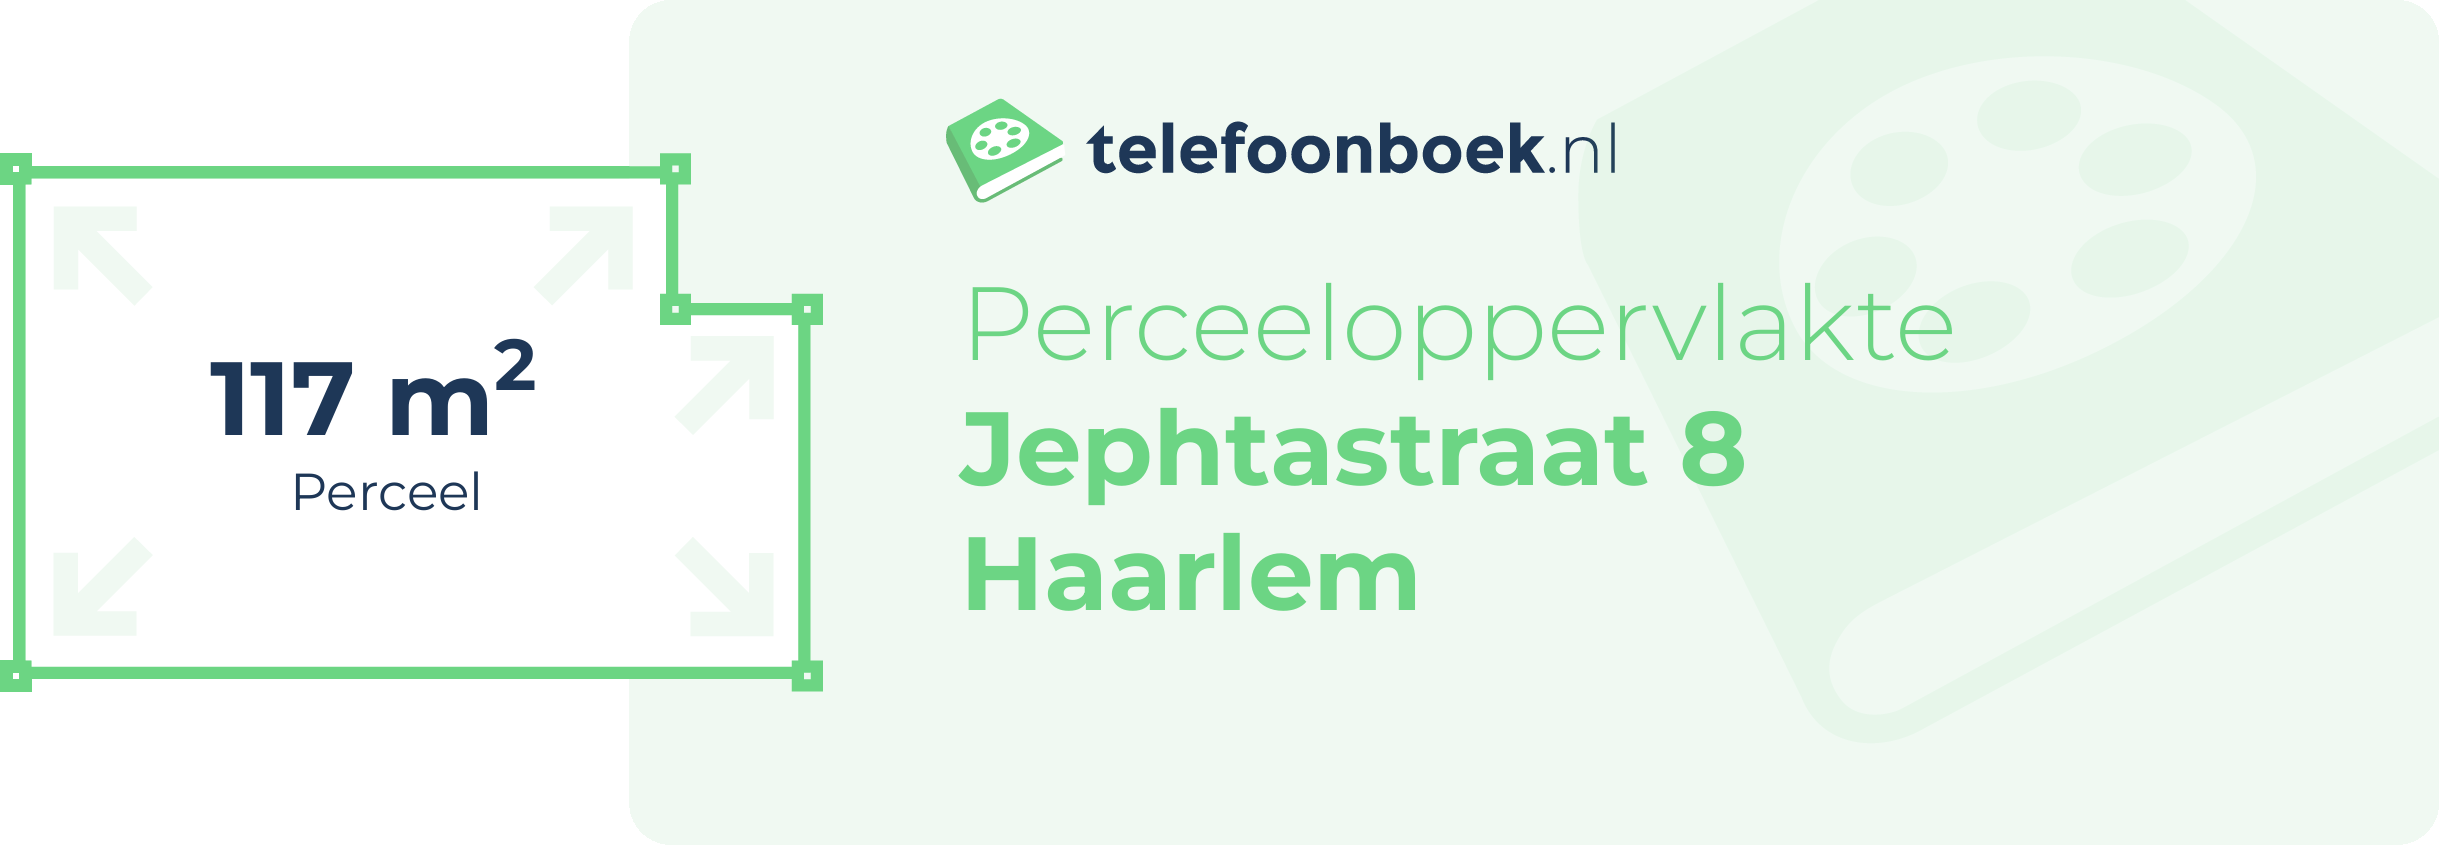 Perceeloppervlakte Jephtastraat 8 Haarlem